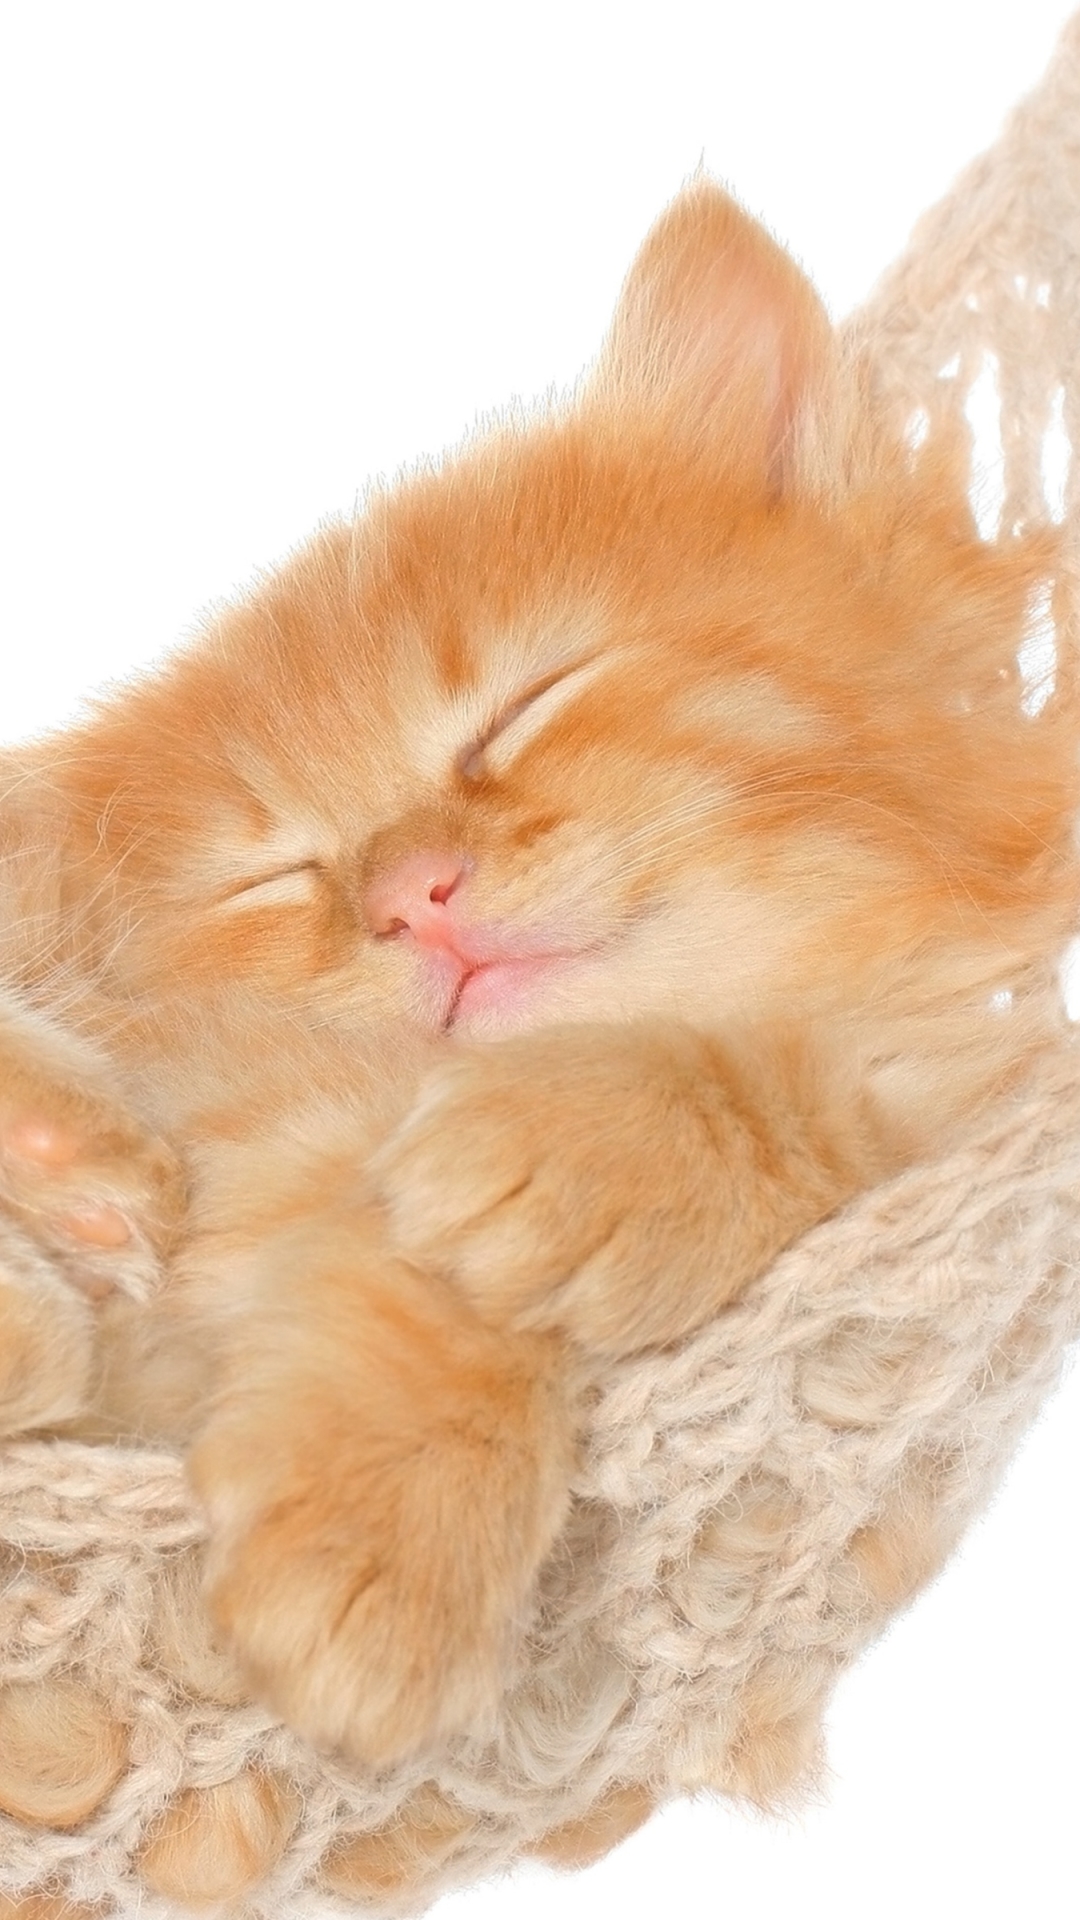 Kitten Sleeping in Hammock